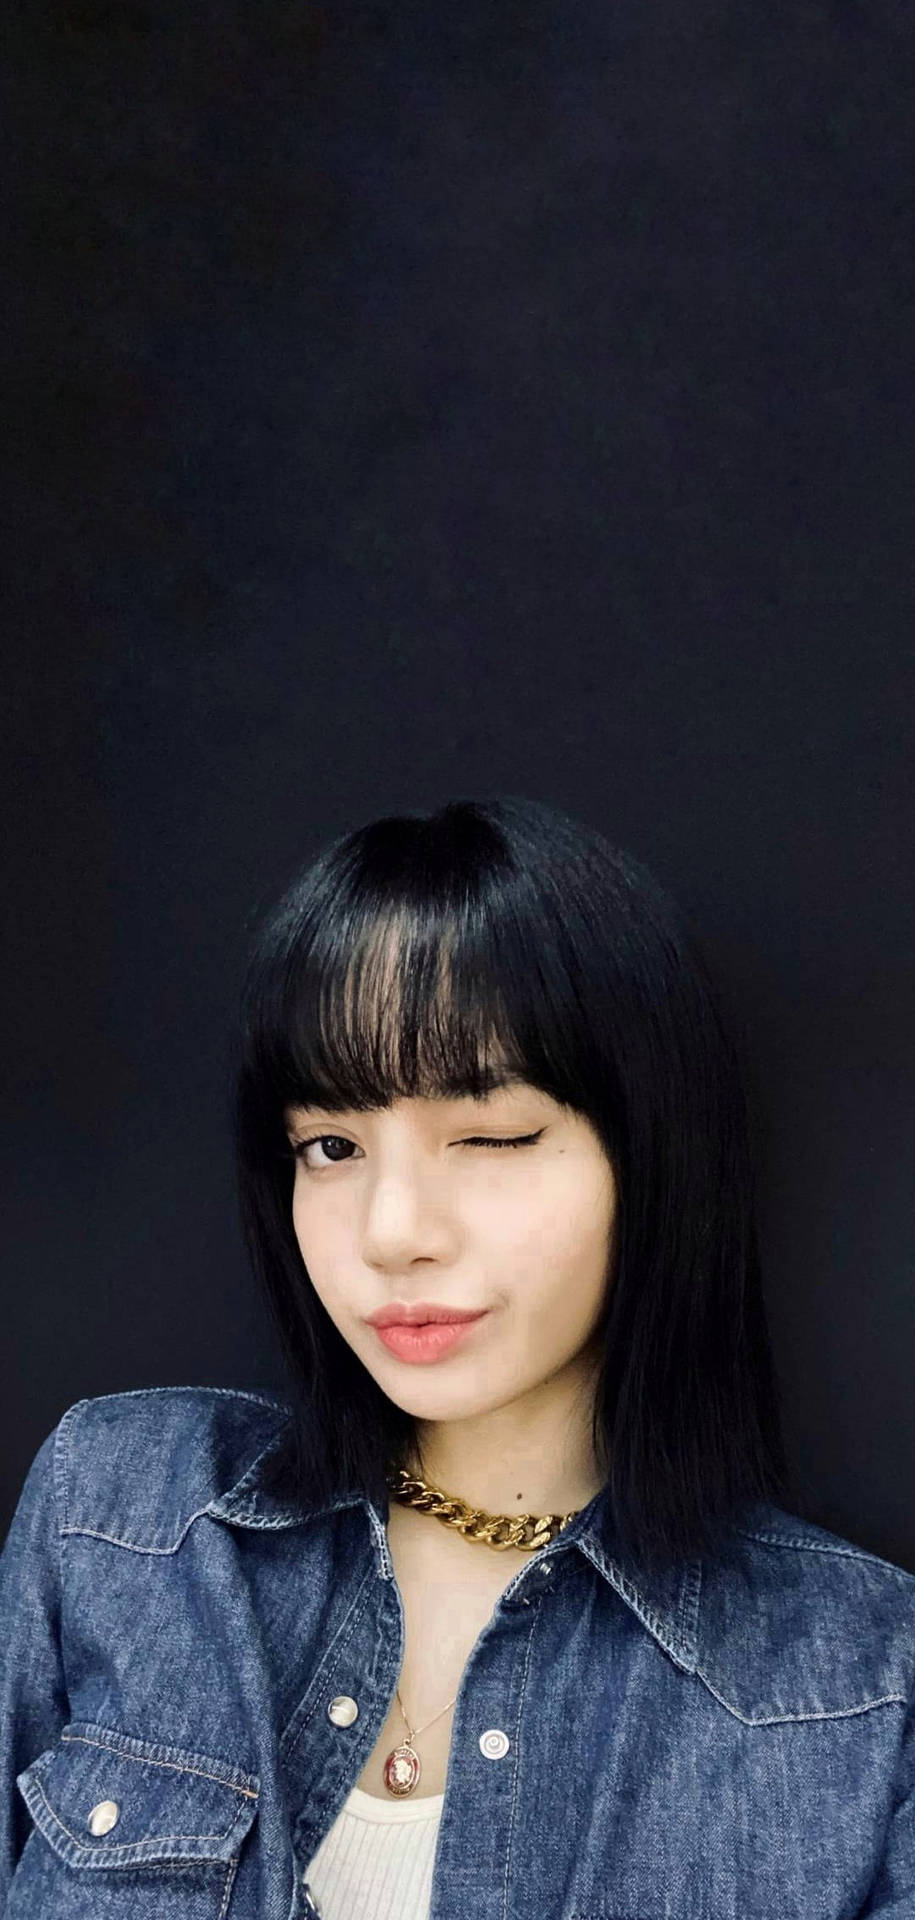 Lisa Blackpink HD Weibo International Selfie Wallpaper